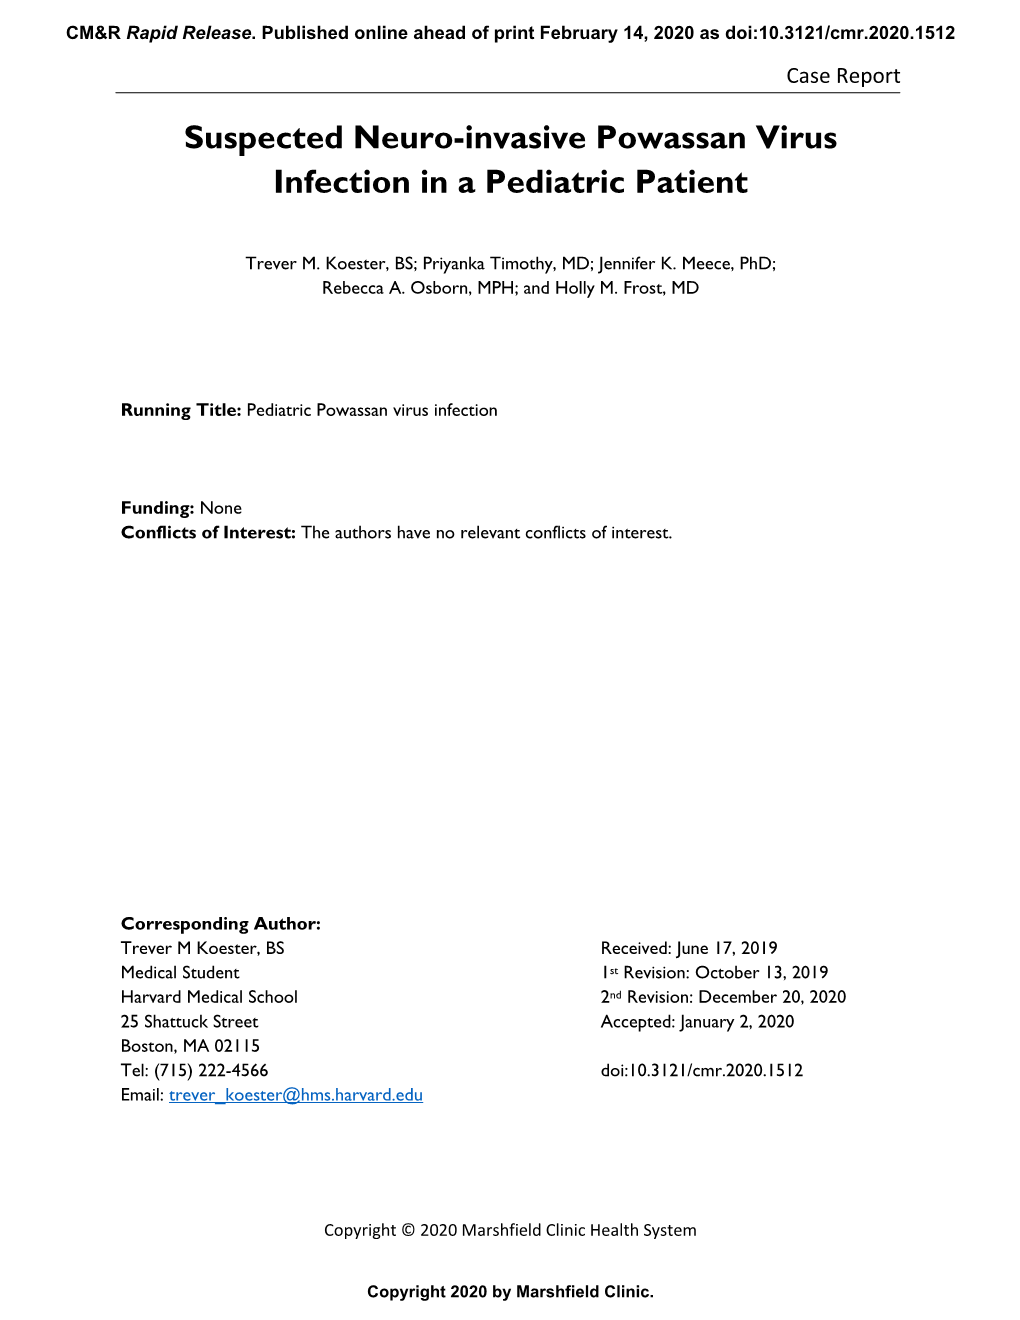 Suspected Neuro-Invasive Powassan Virus Infection in a Pediatric Patient